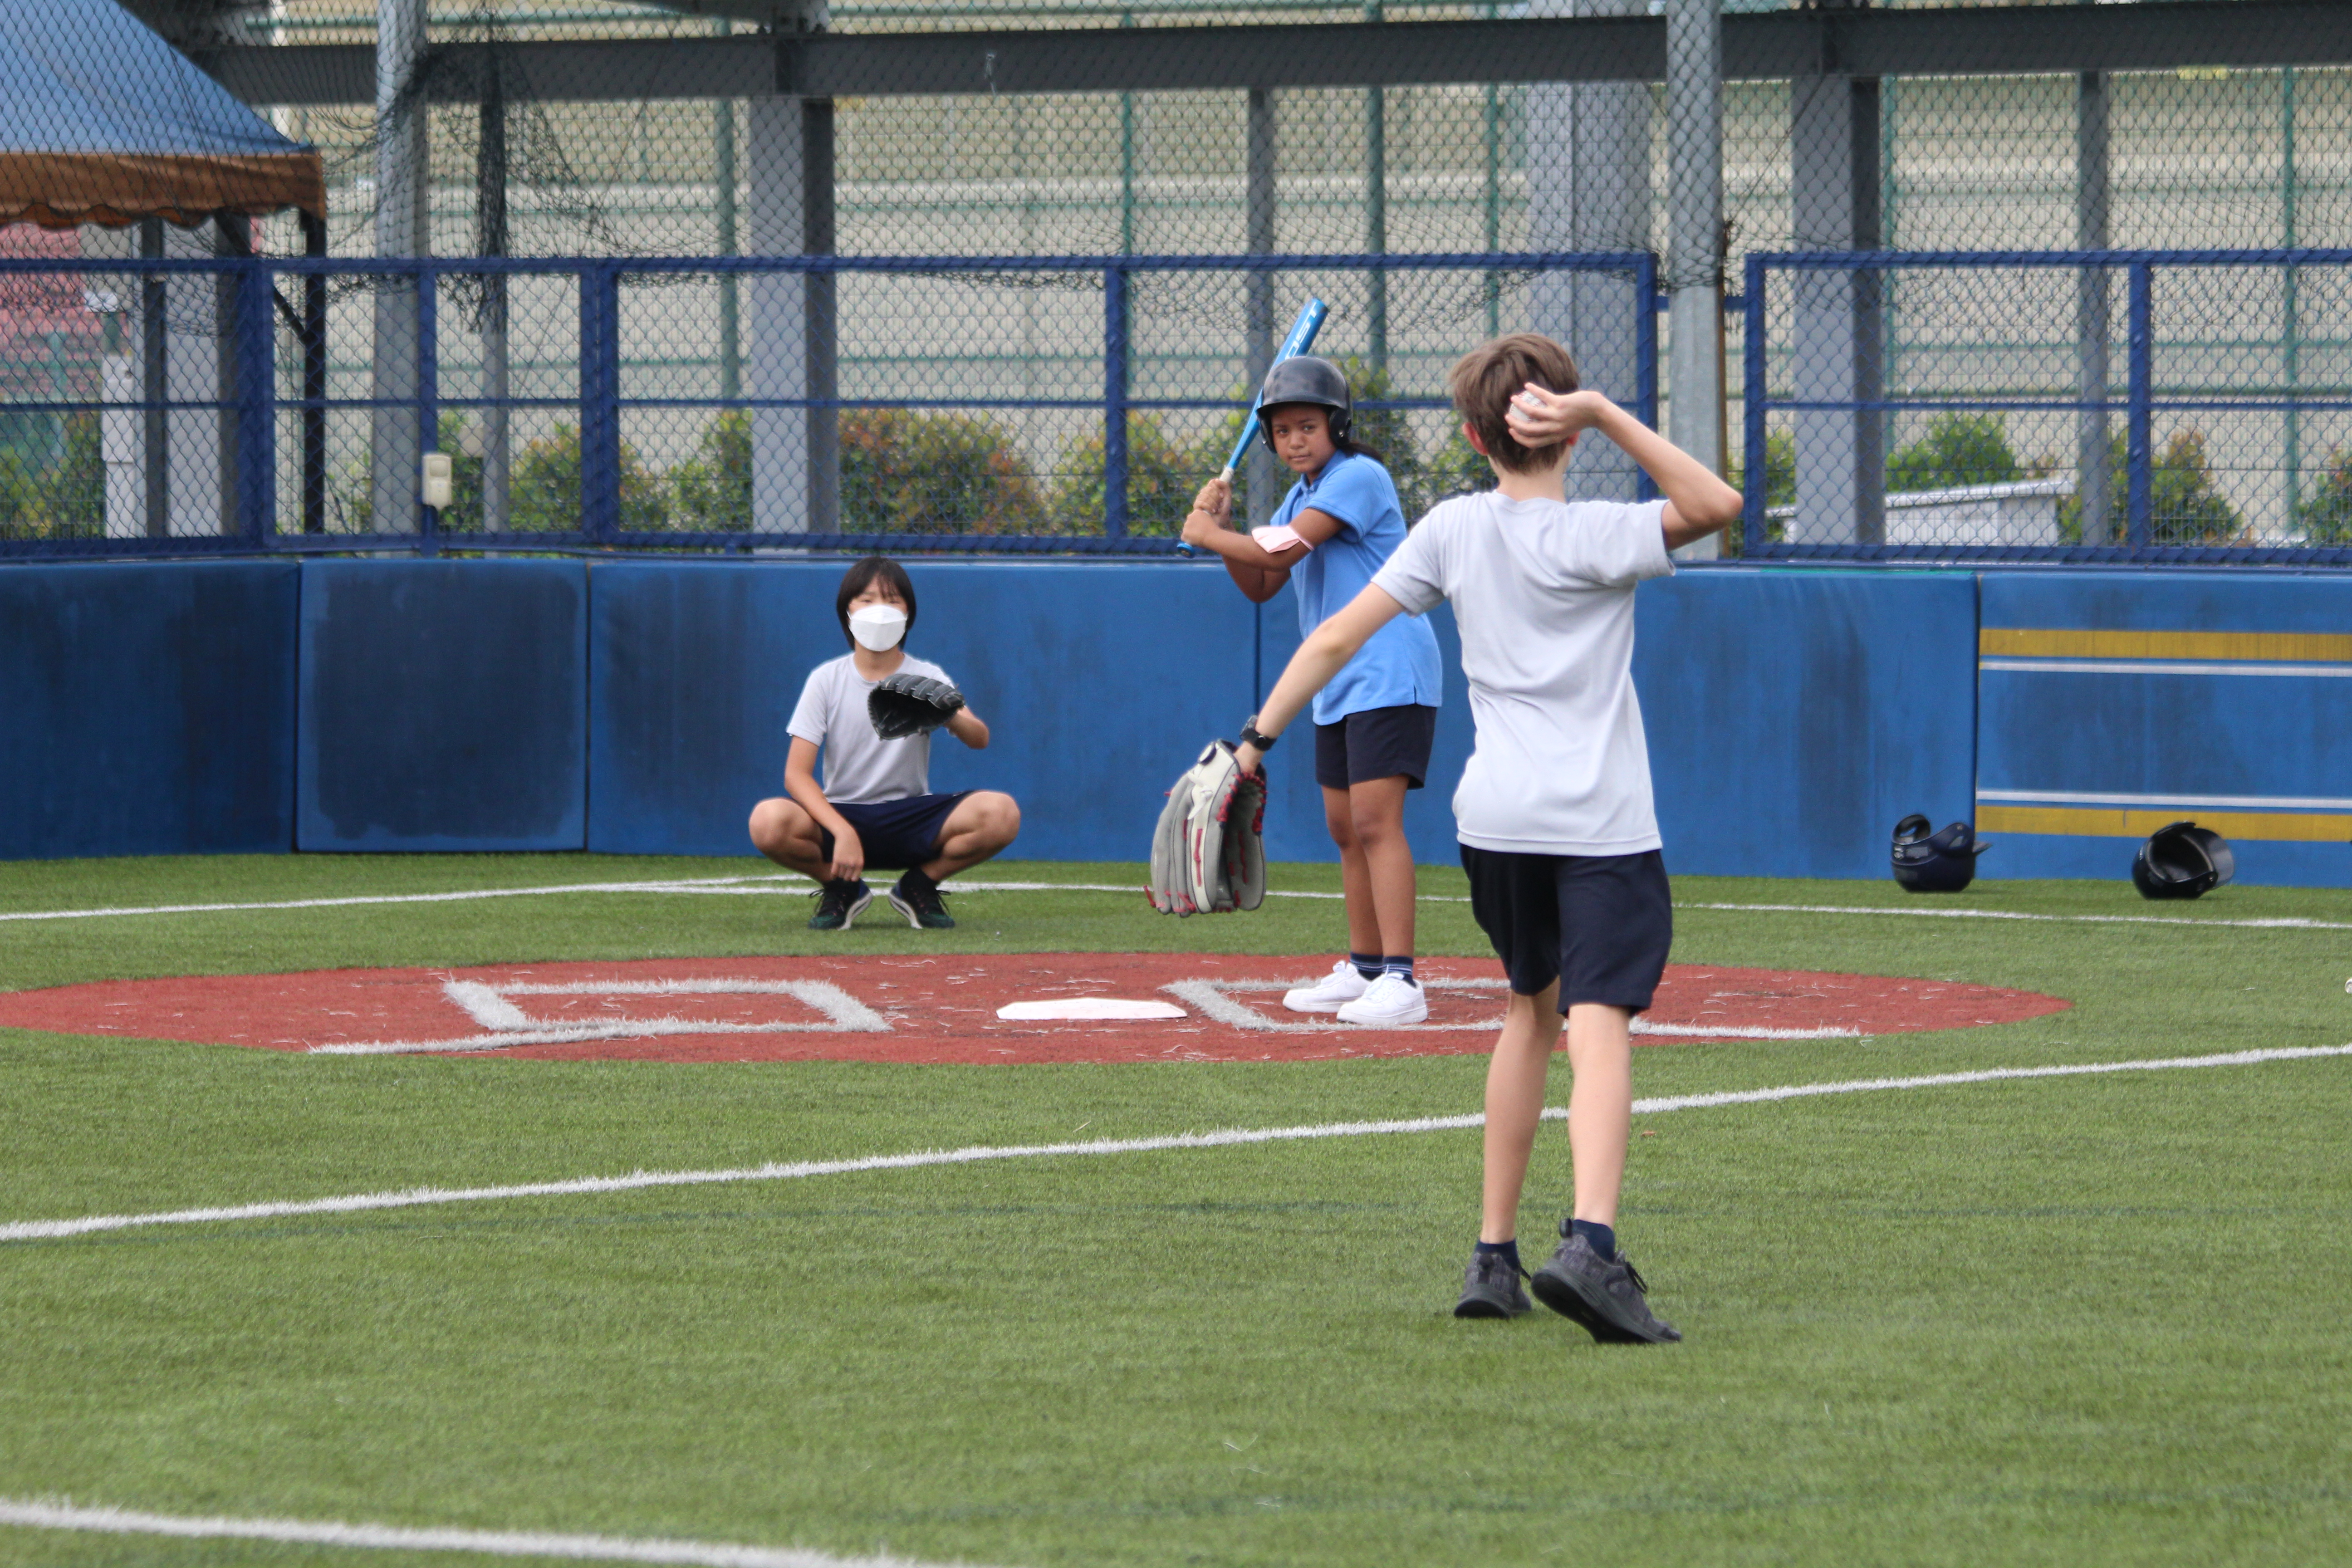 Students playing Baseball